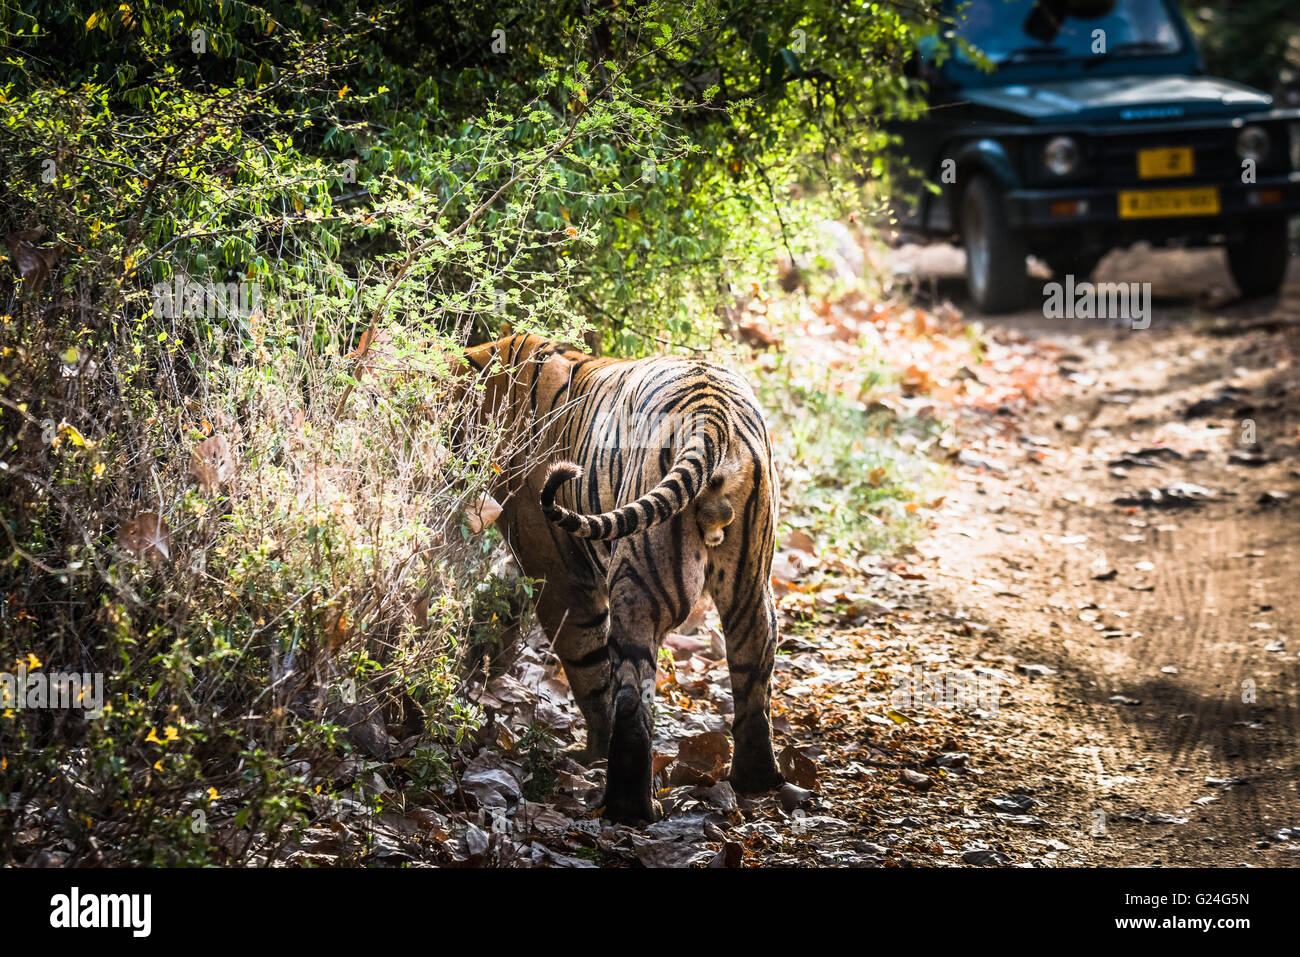 Royal Bengal Tiger named Ustaad from Ranthambore Tiger reserve strolling at natural habitat Stock Photo